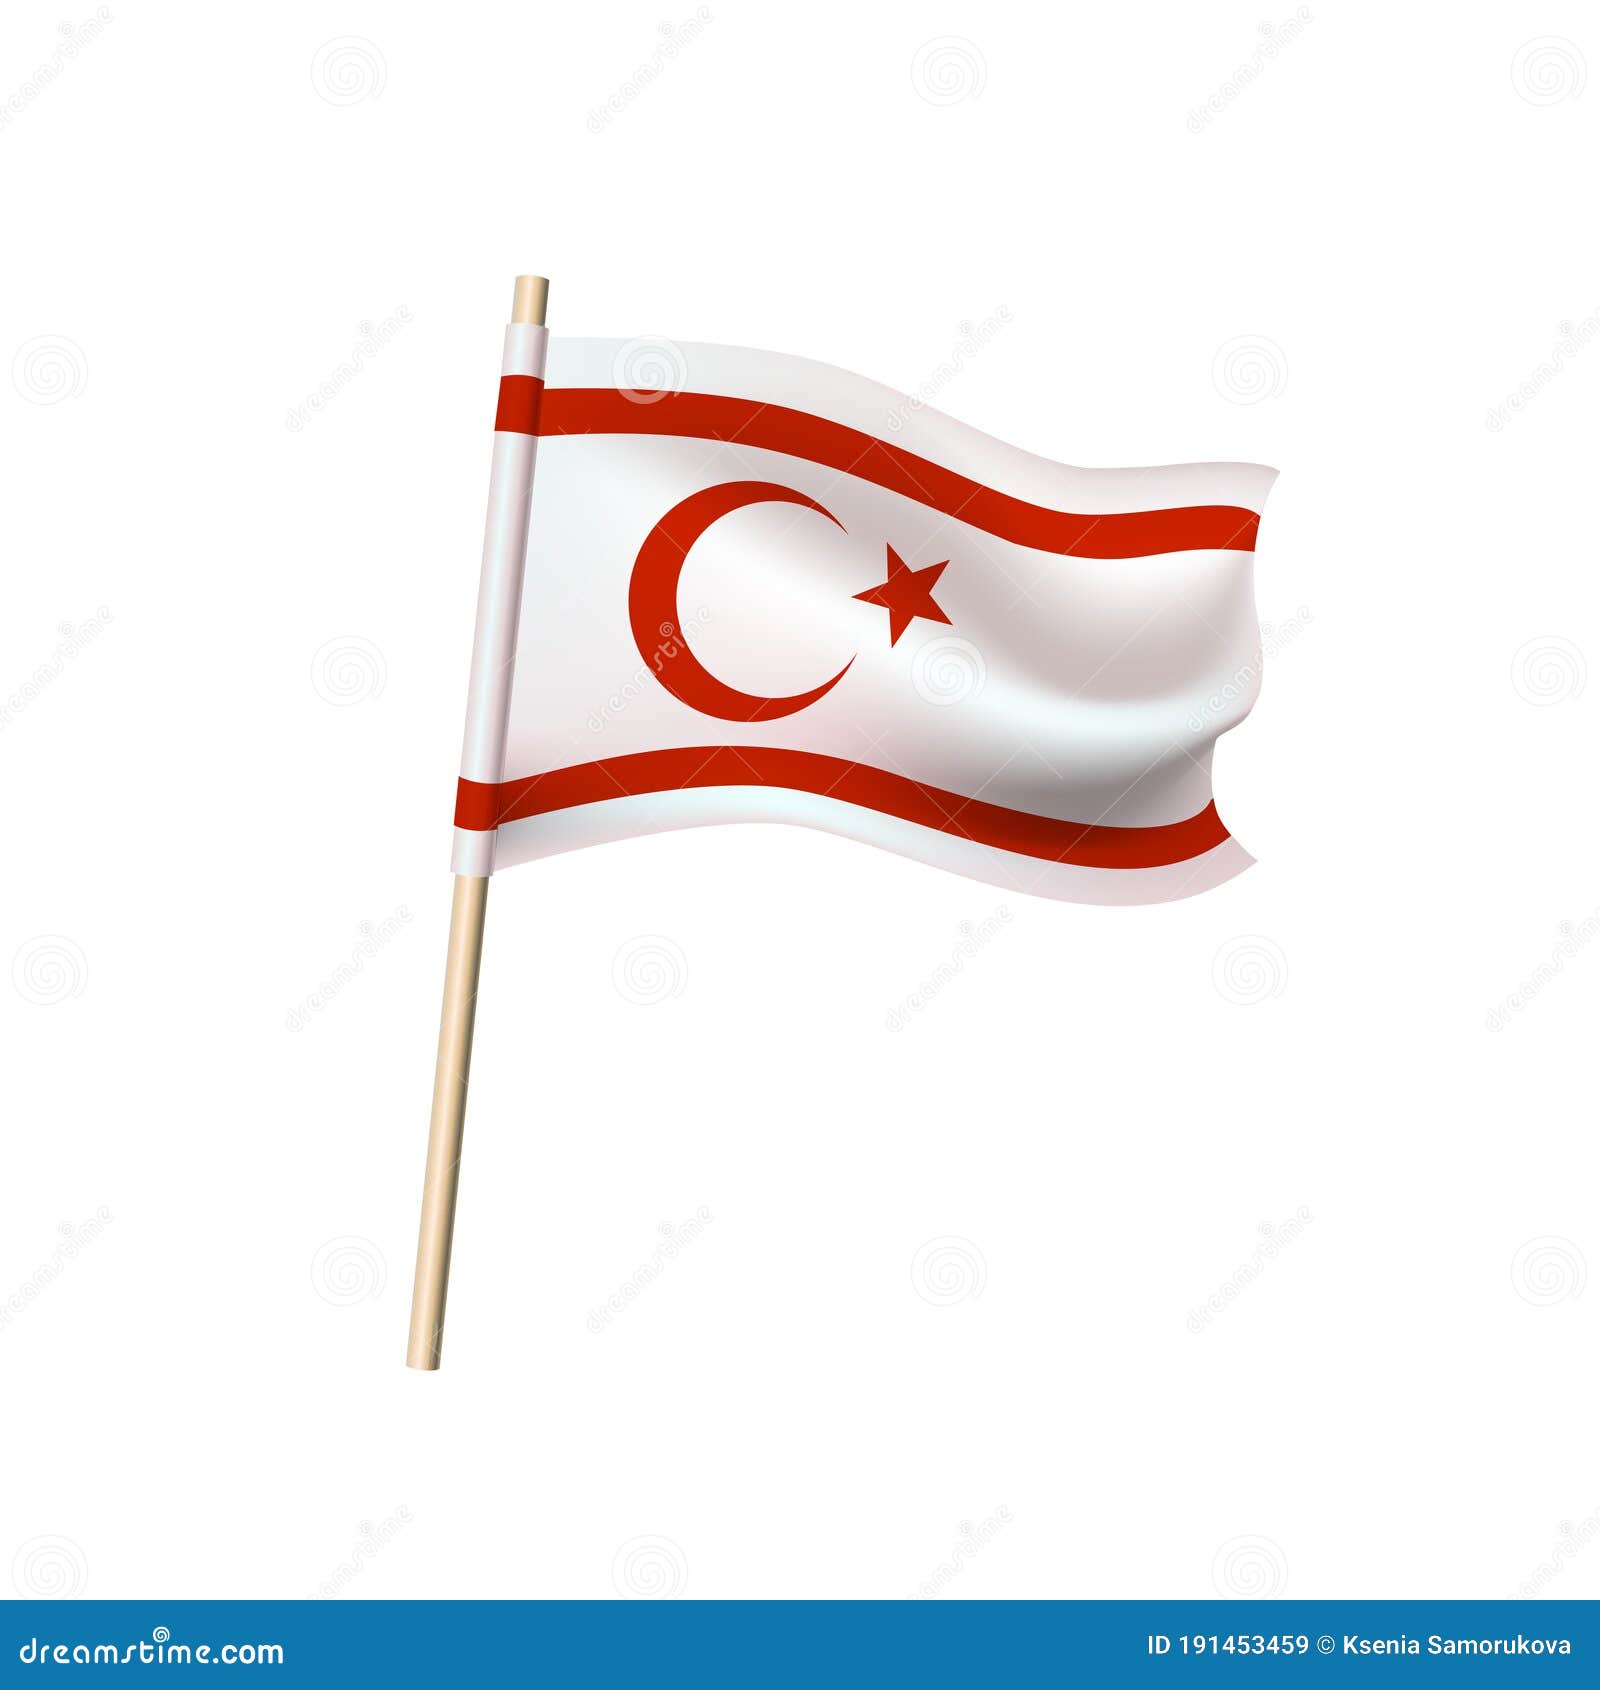 Сколько звезд на флаге турции. Флаг турецкой Республики. Флаг турецкого Кипра. Флаг Северного Кипра. Флаги на турецких окнах.